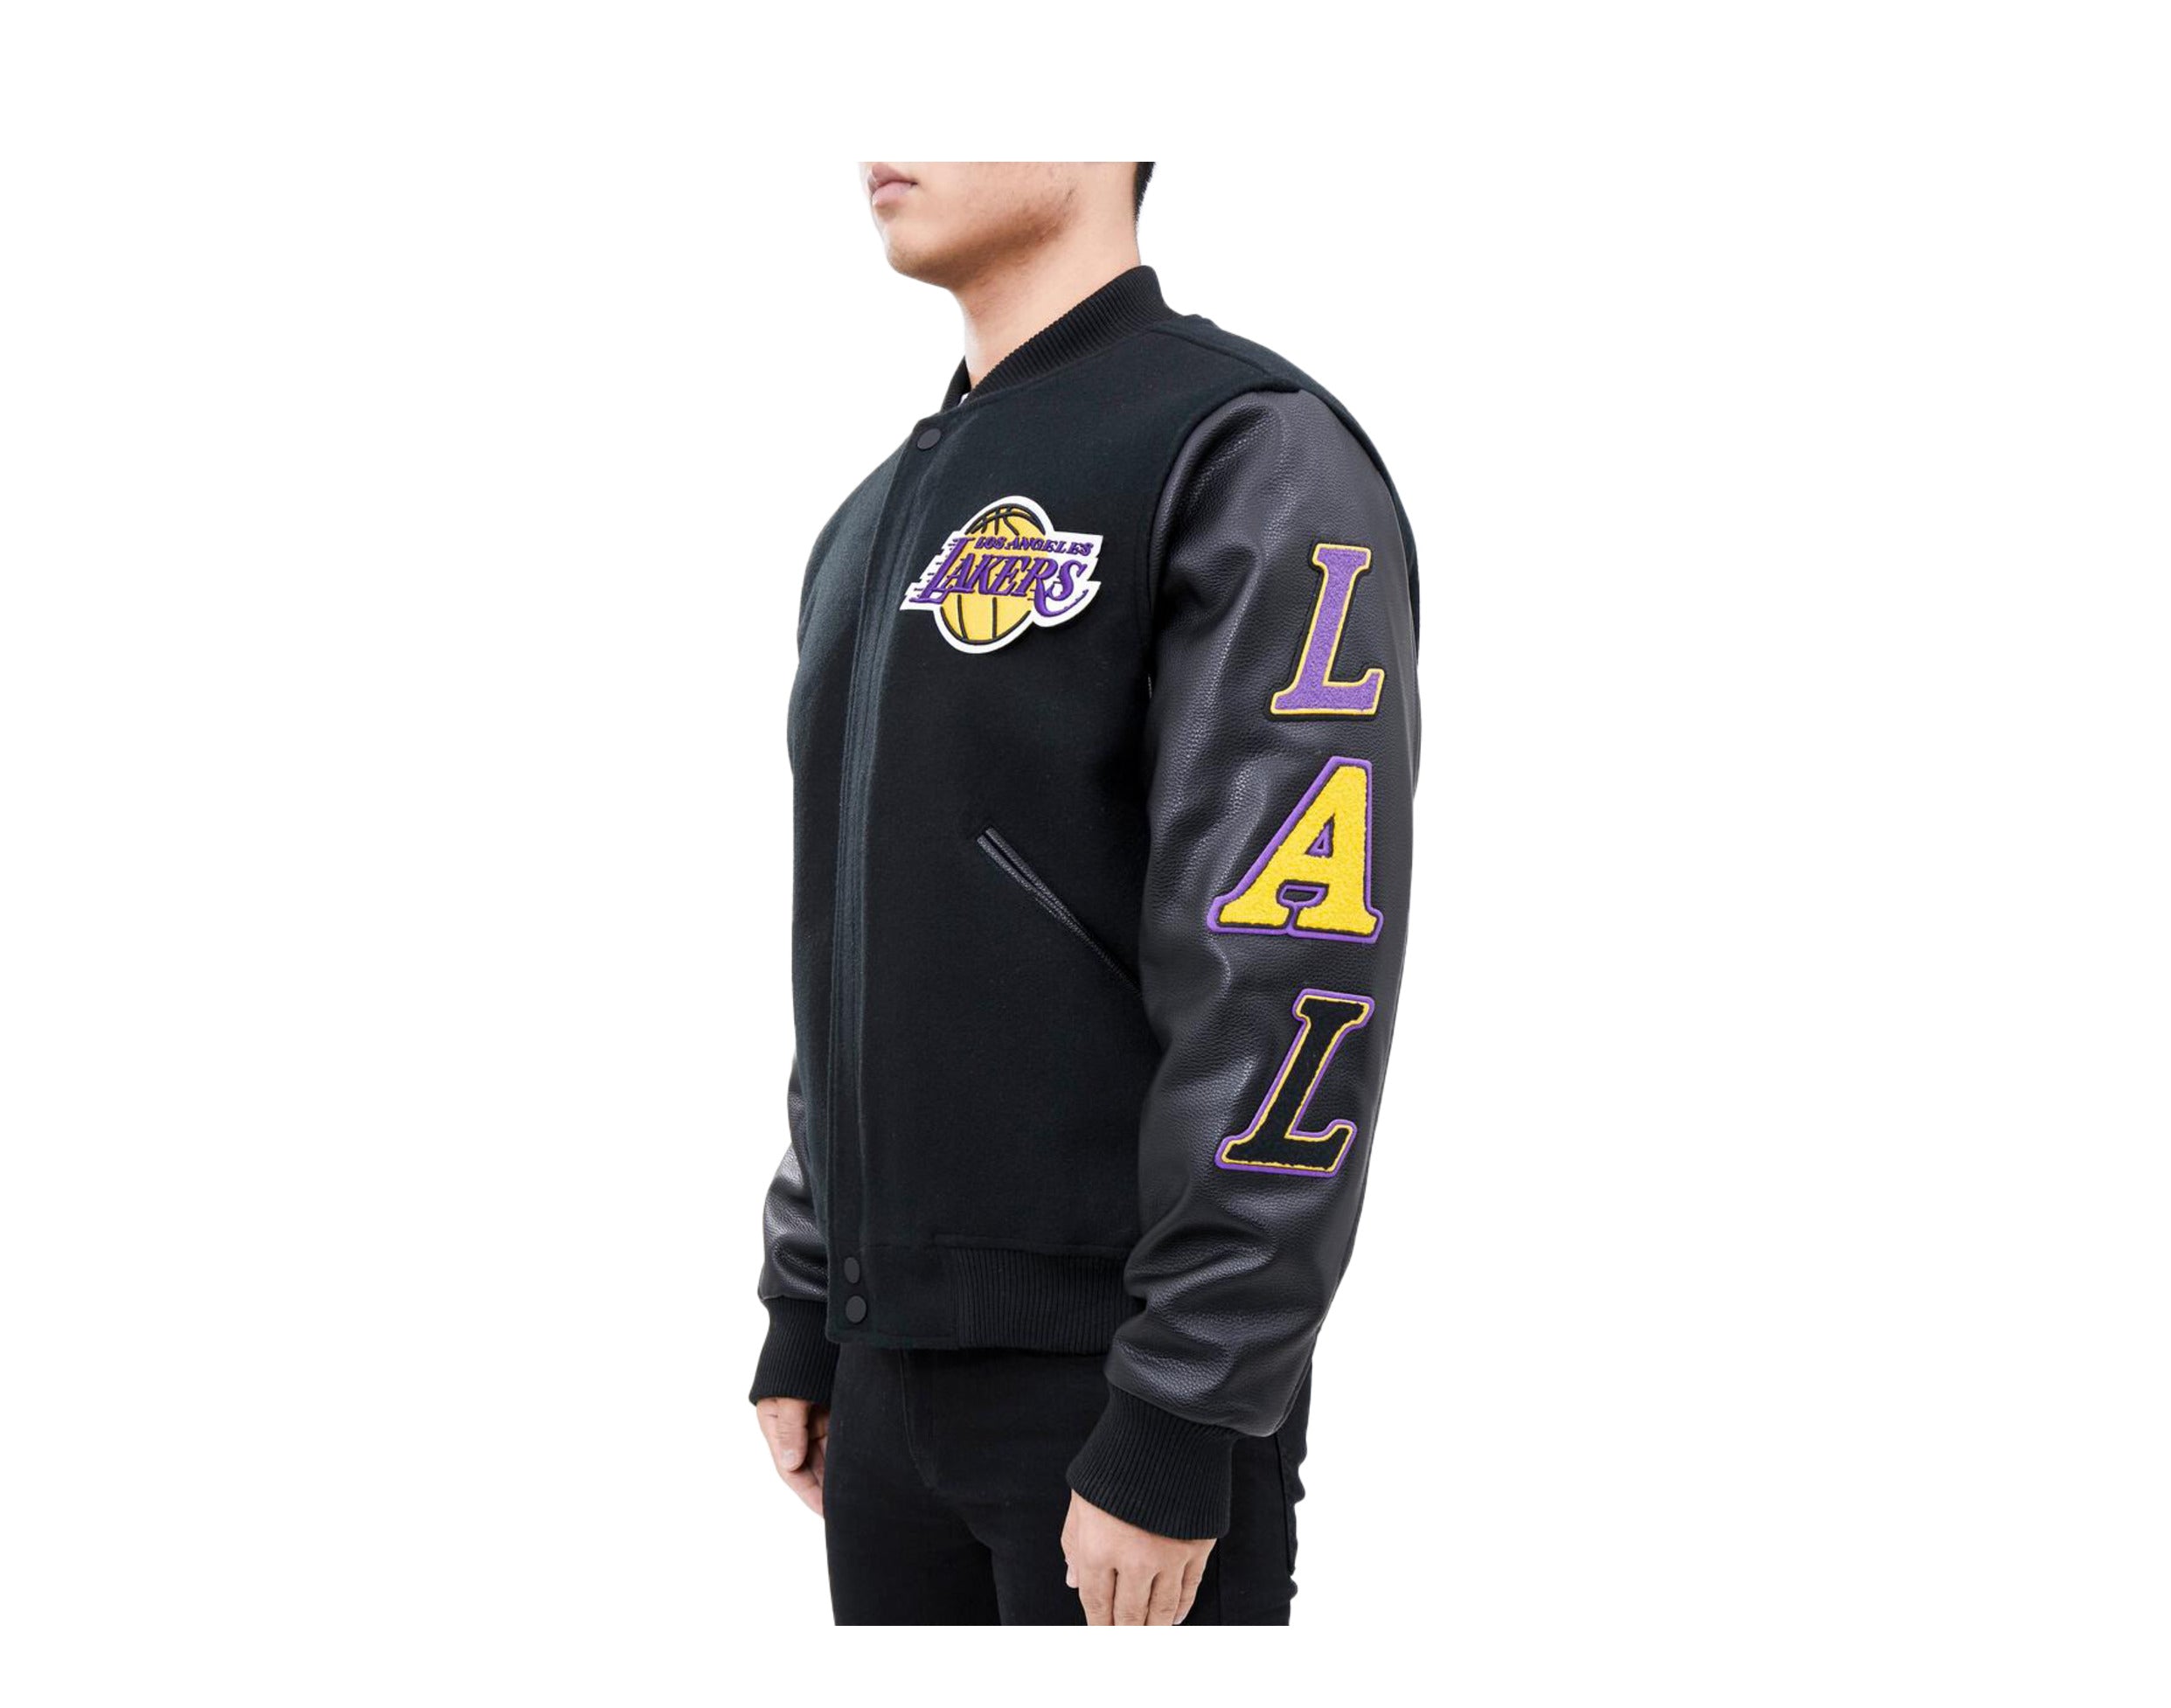 Maker of Jacket Clearance Sale Los Angeles Lakers NBA Varsity Size Men's XL